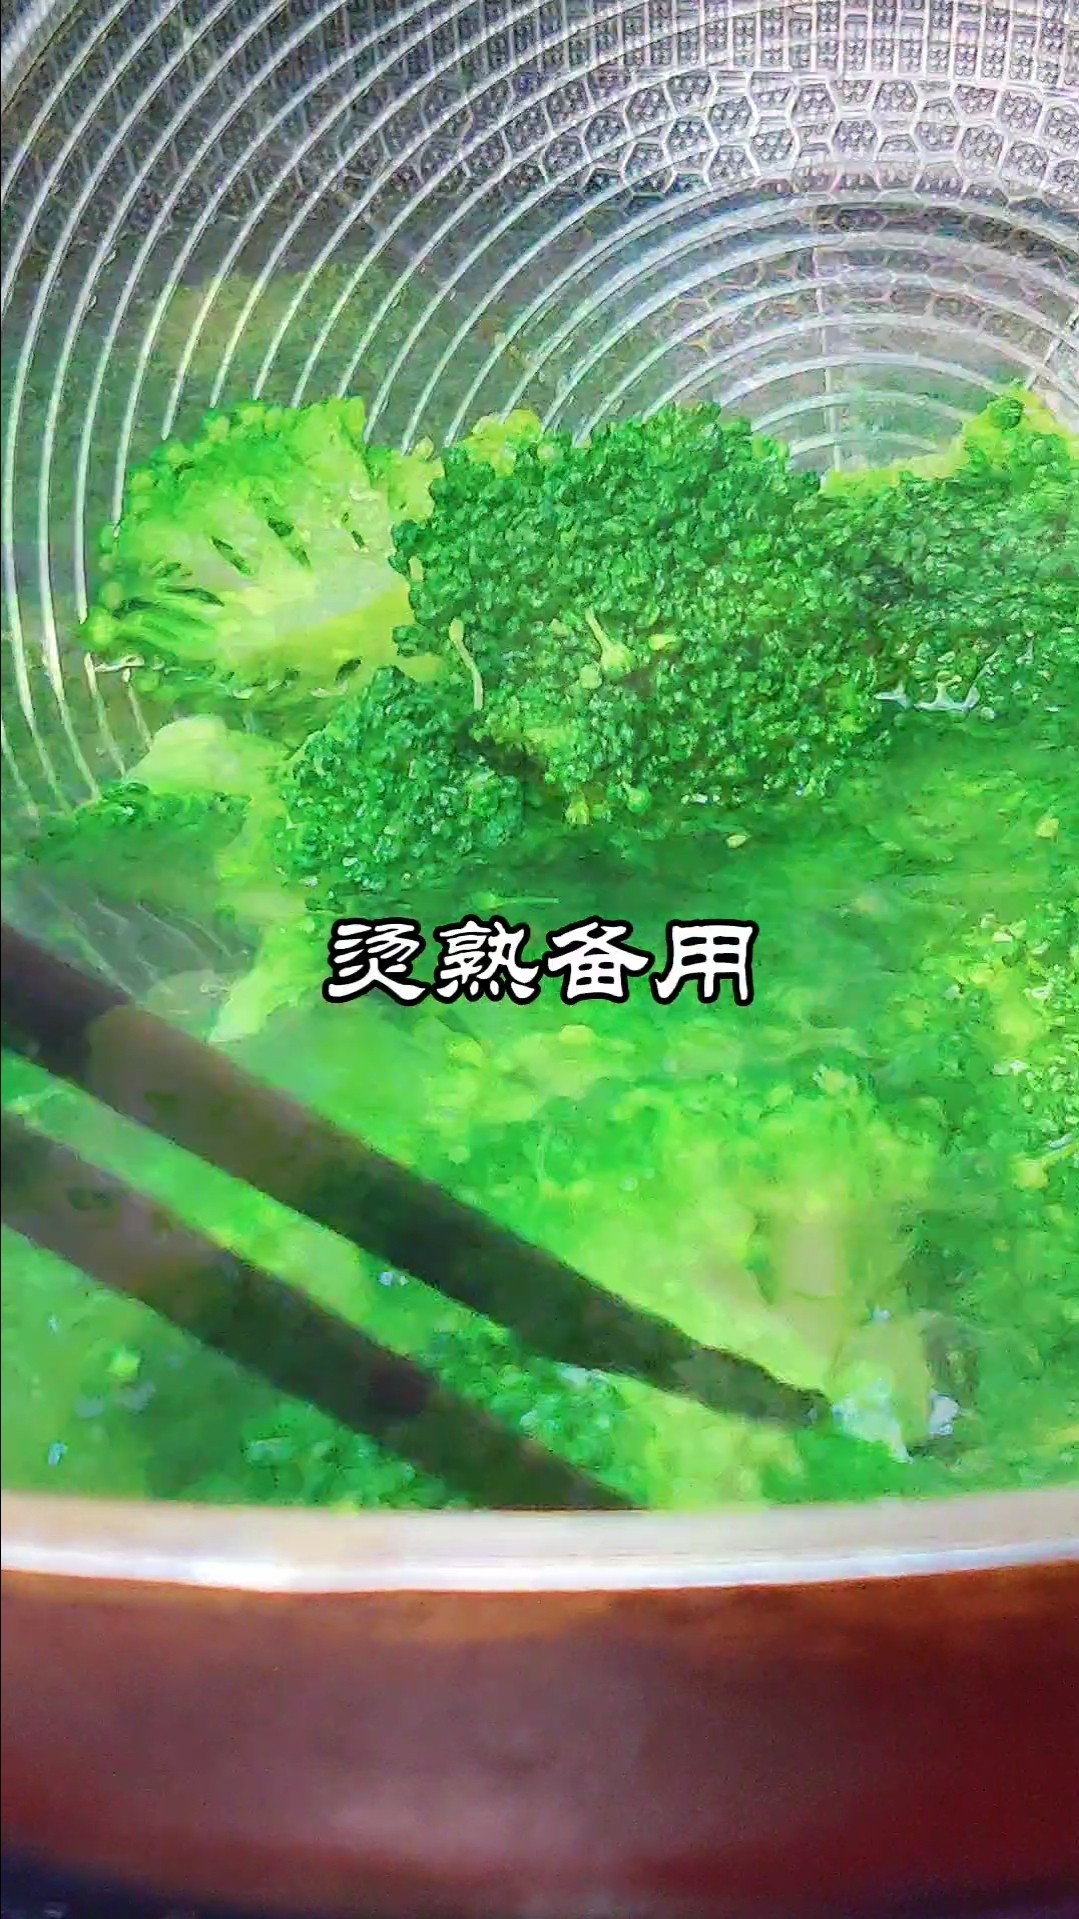 Shrimp and Egg Slitting Broccoli recipe